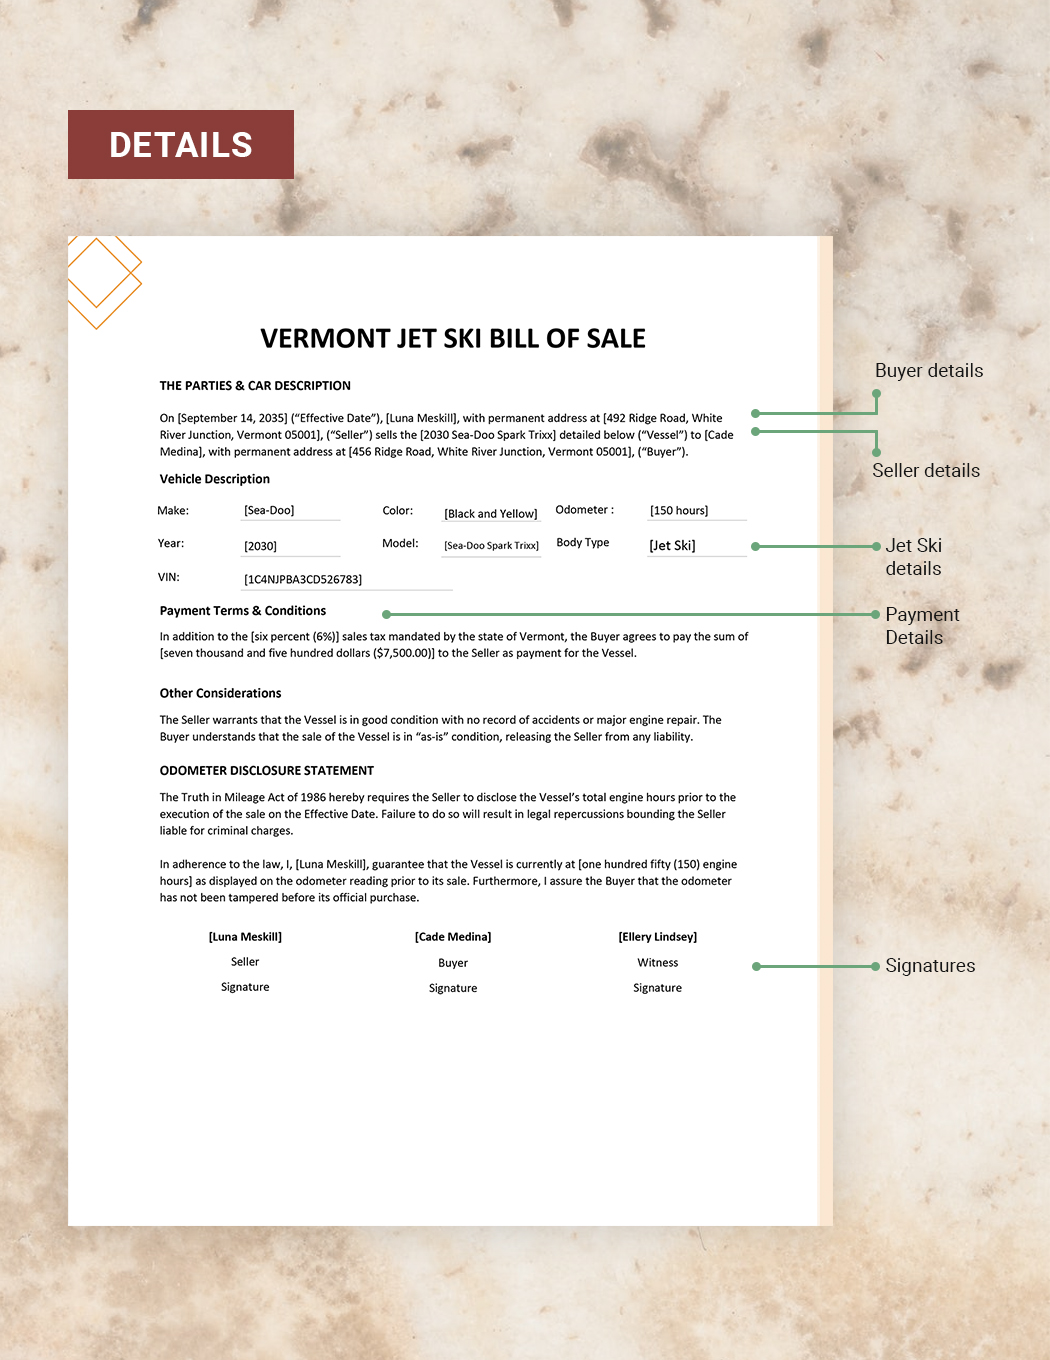 Vermont Jet Ski Bill of Sale Template